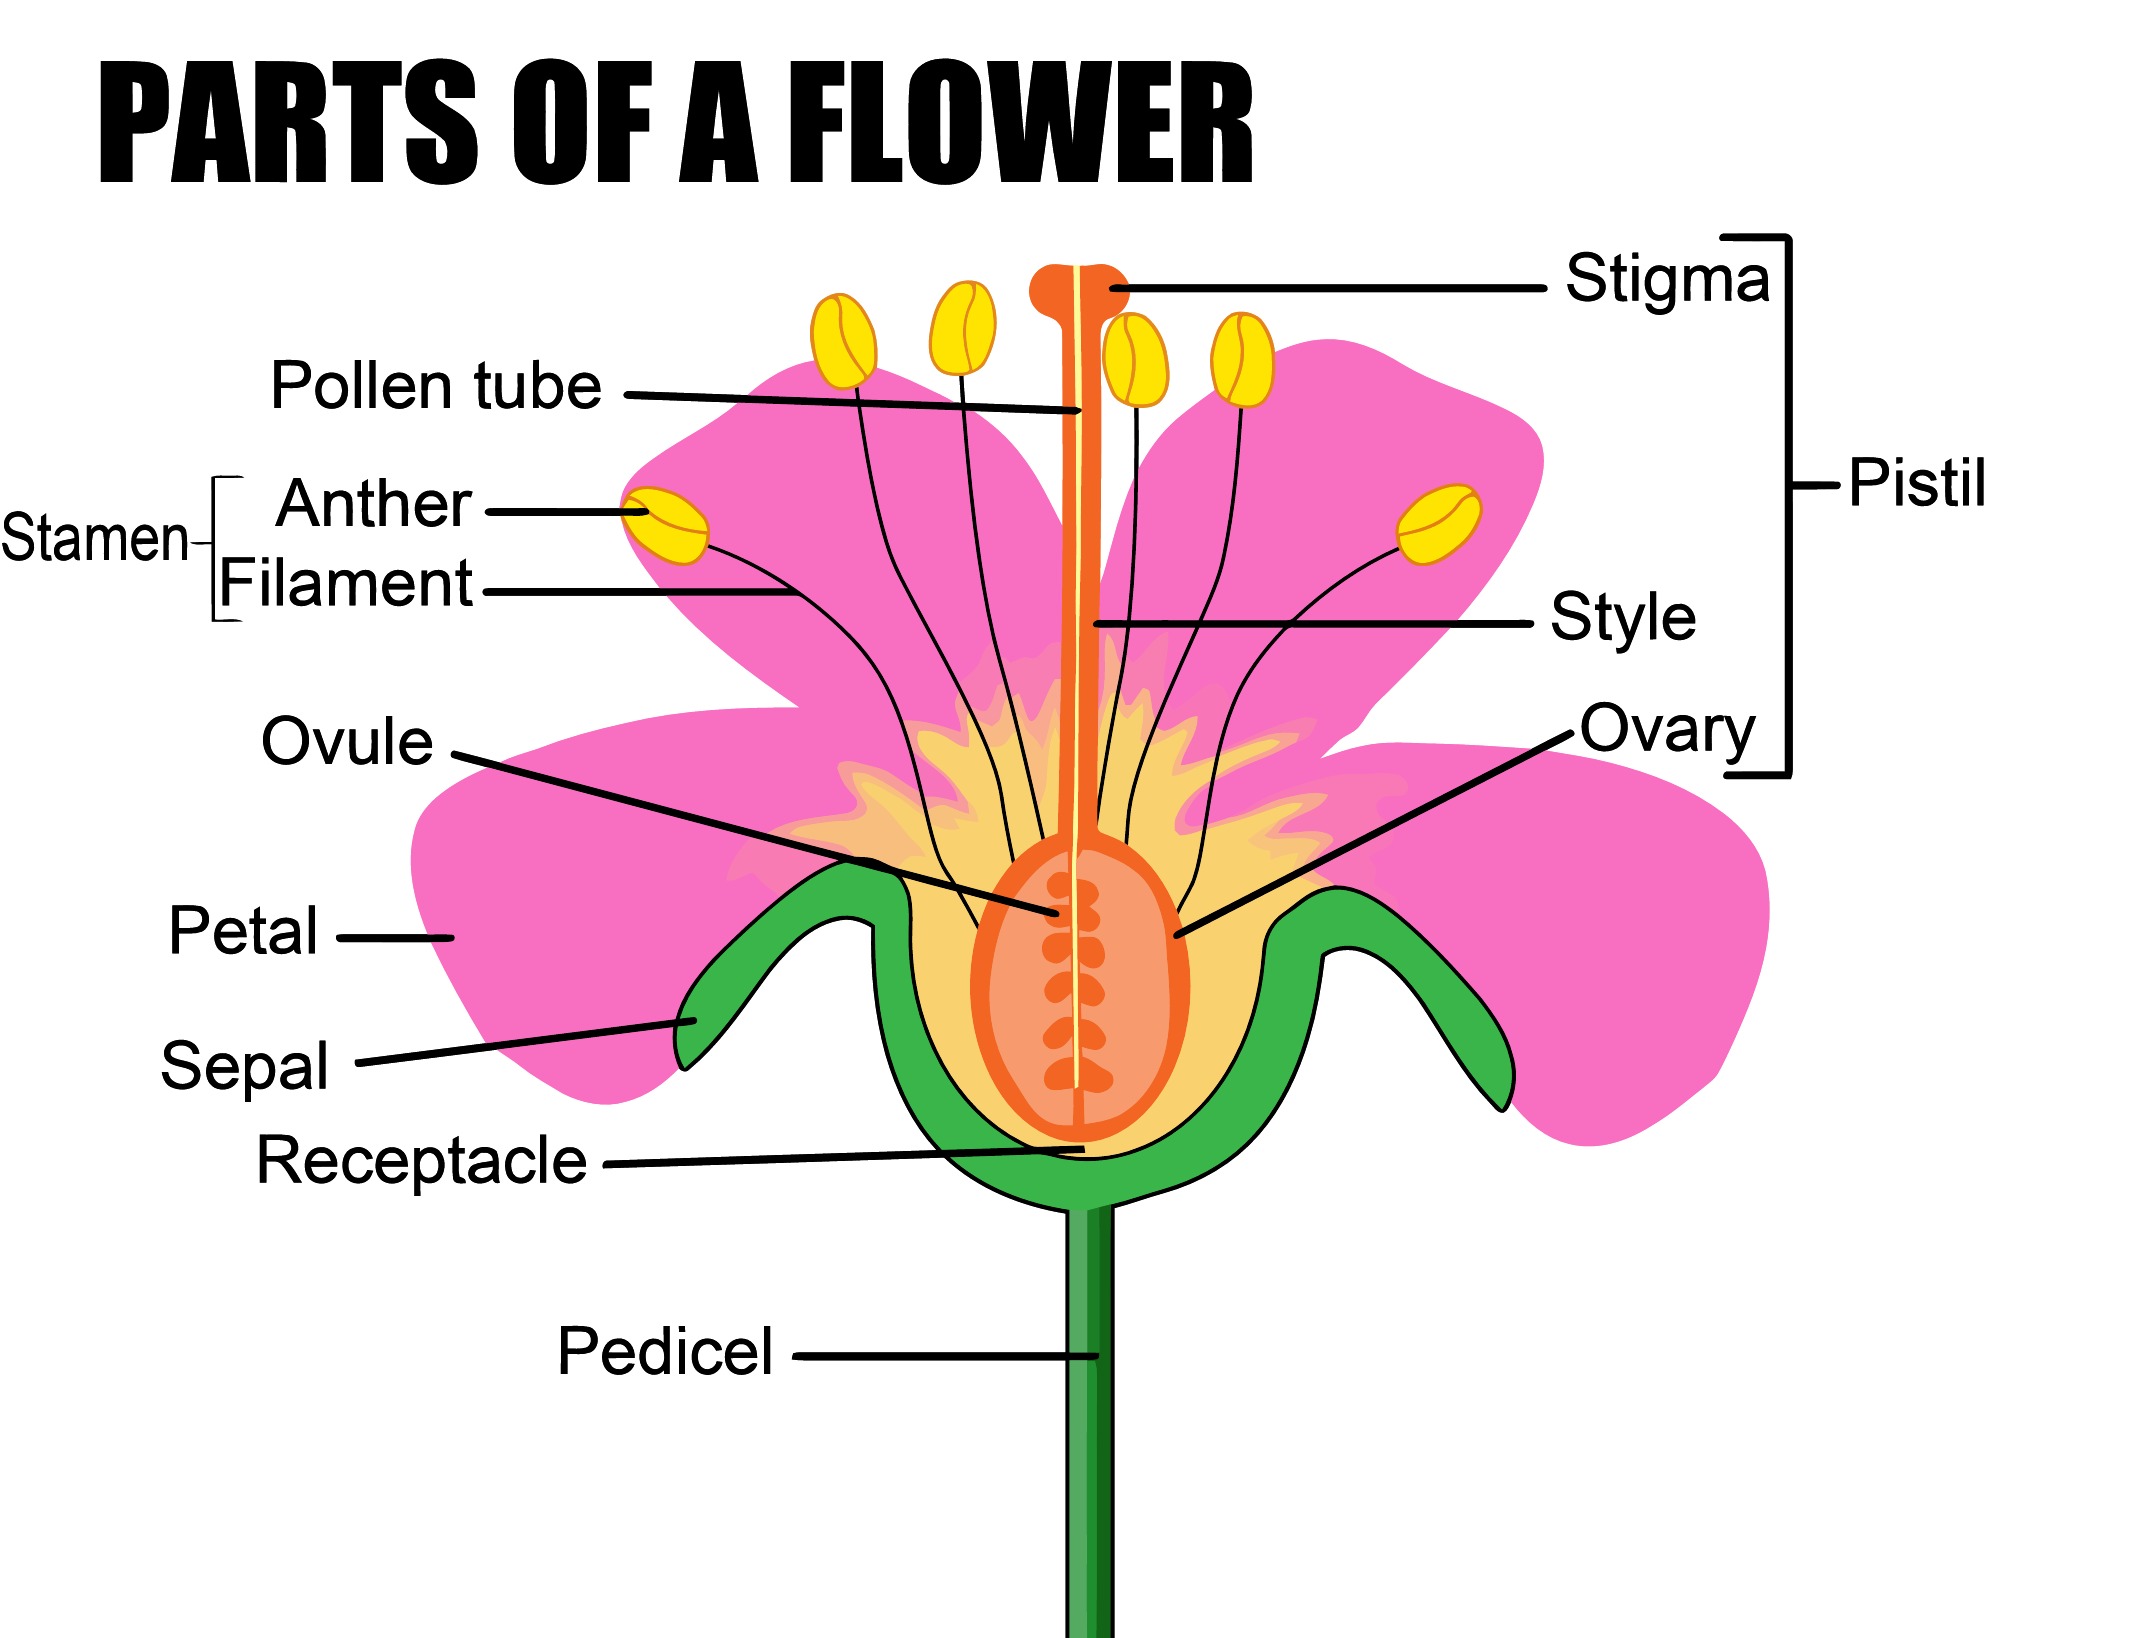 Flower labelled